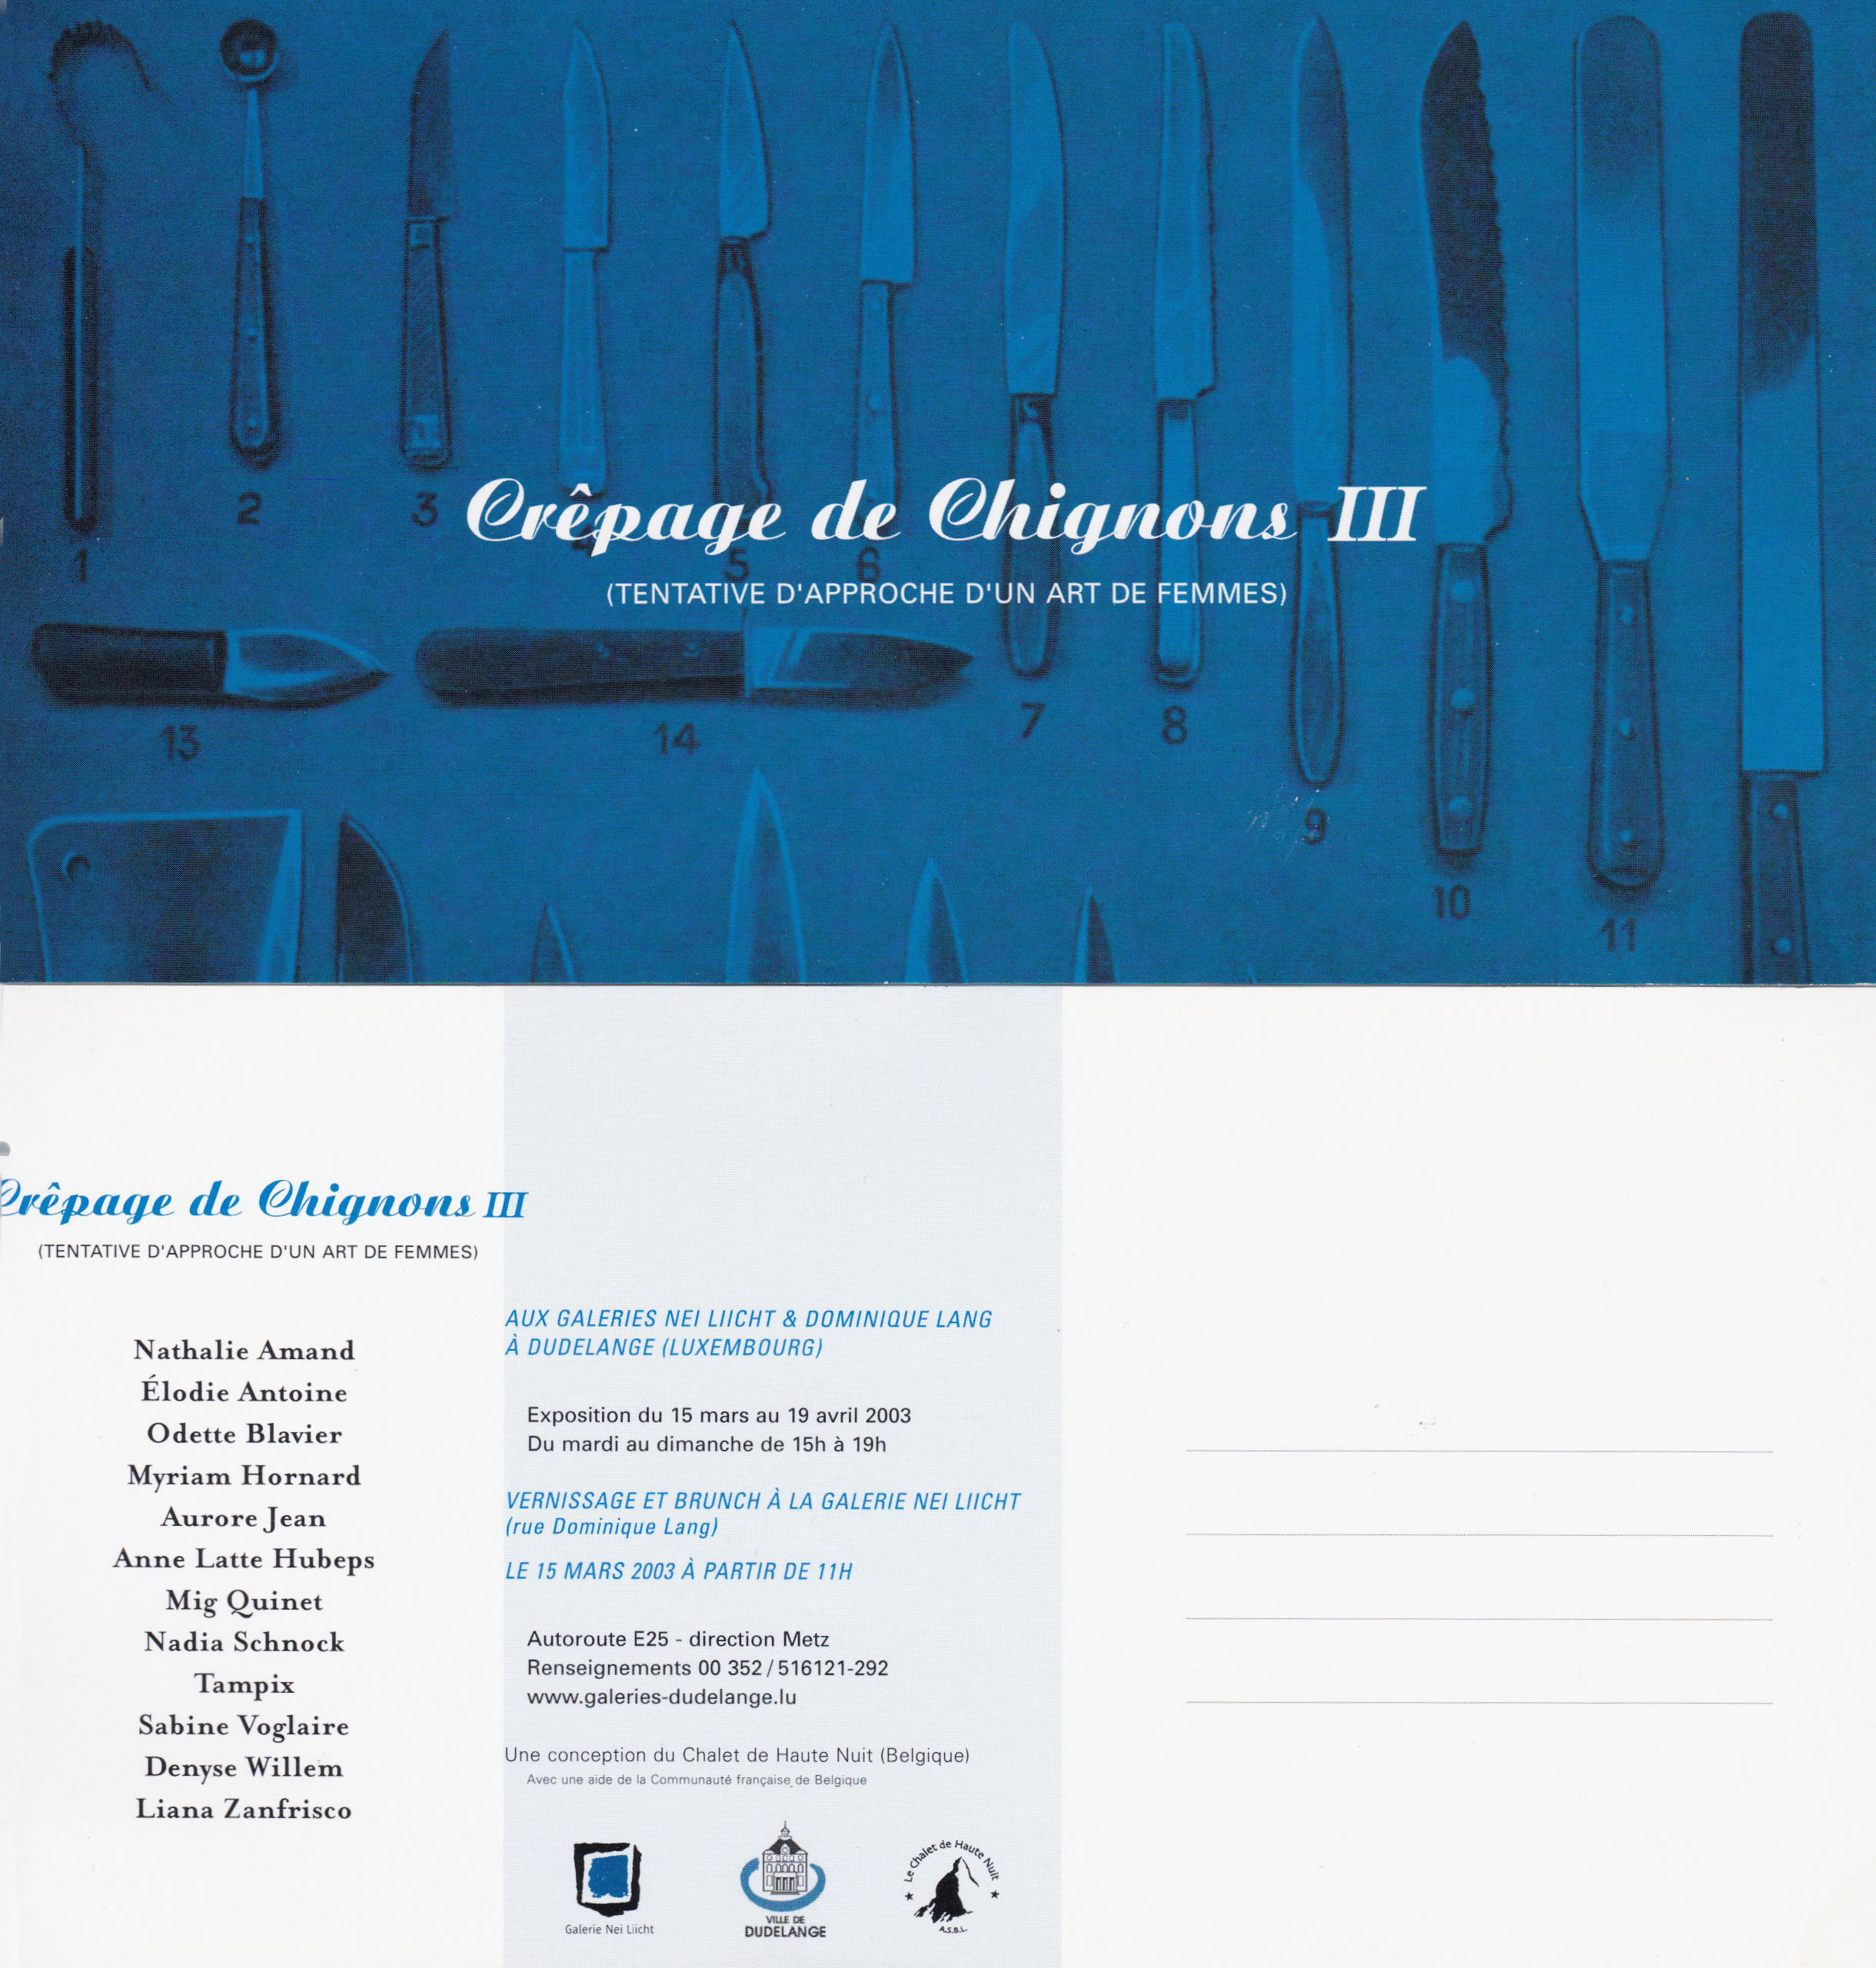 exposition crêpage de chignons 3, 2003